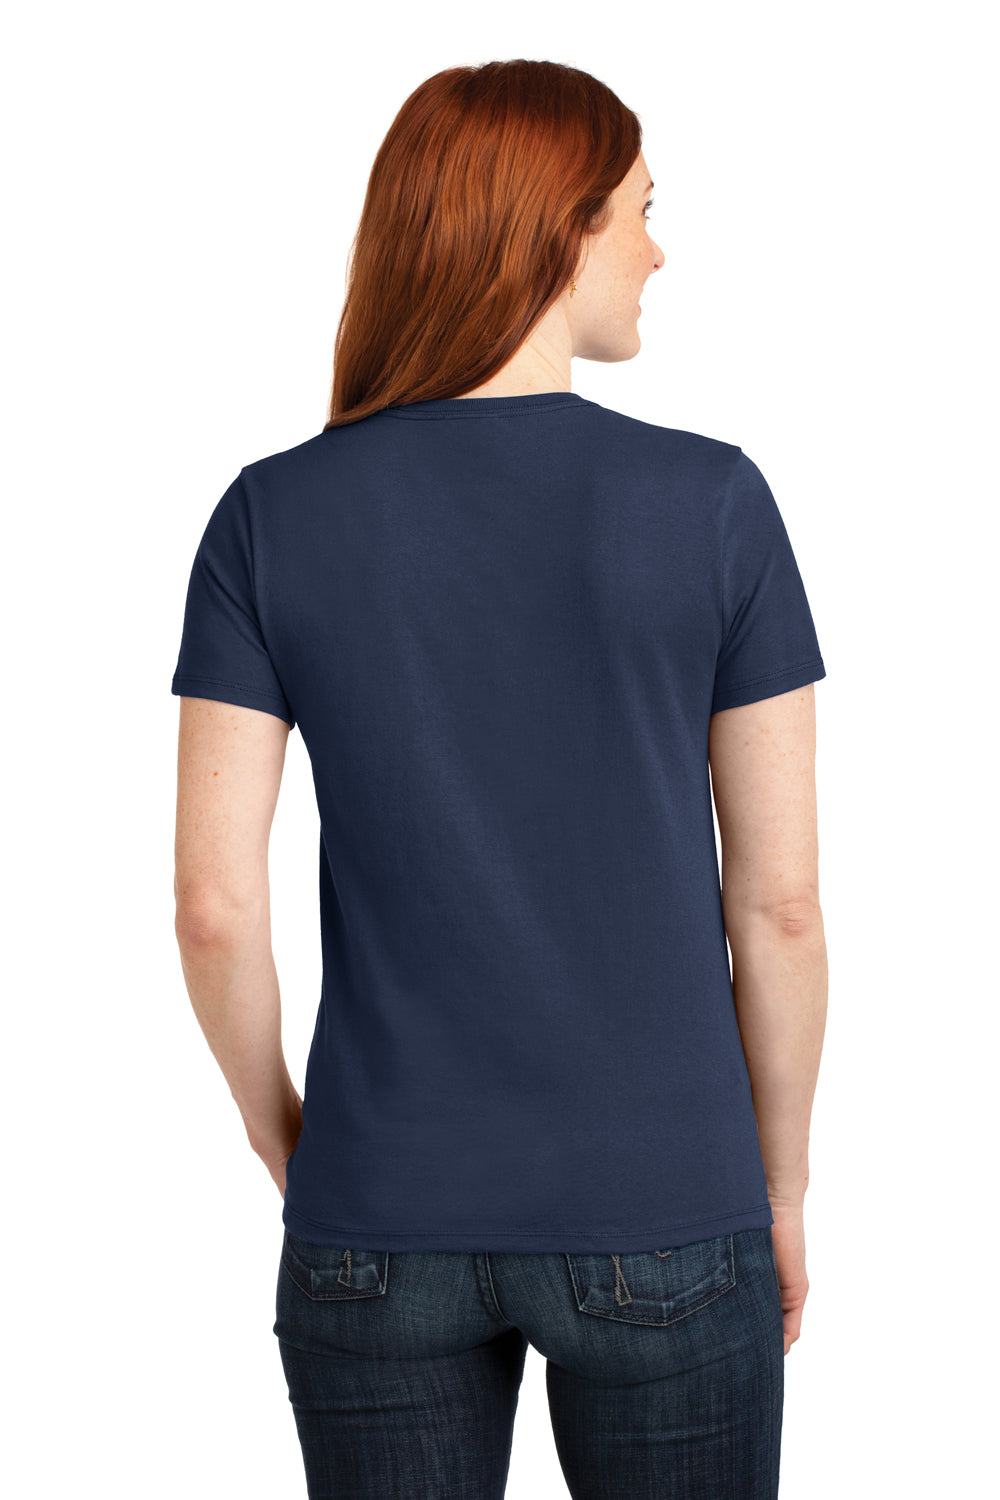 Port & Company LPC55 Womens Core Short Sleeve Crewneck T-Shirt Navy Blue Back